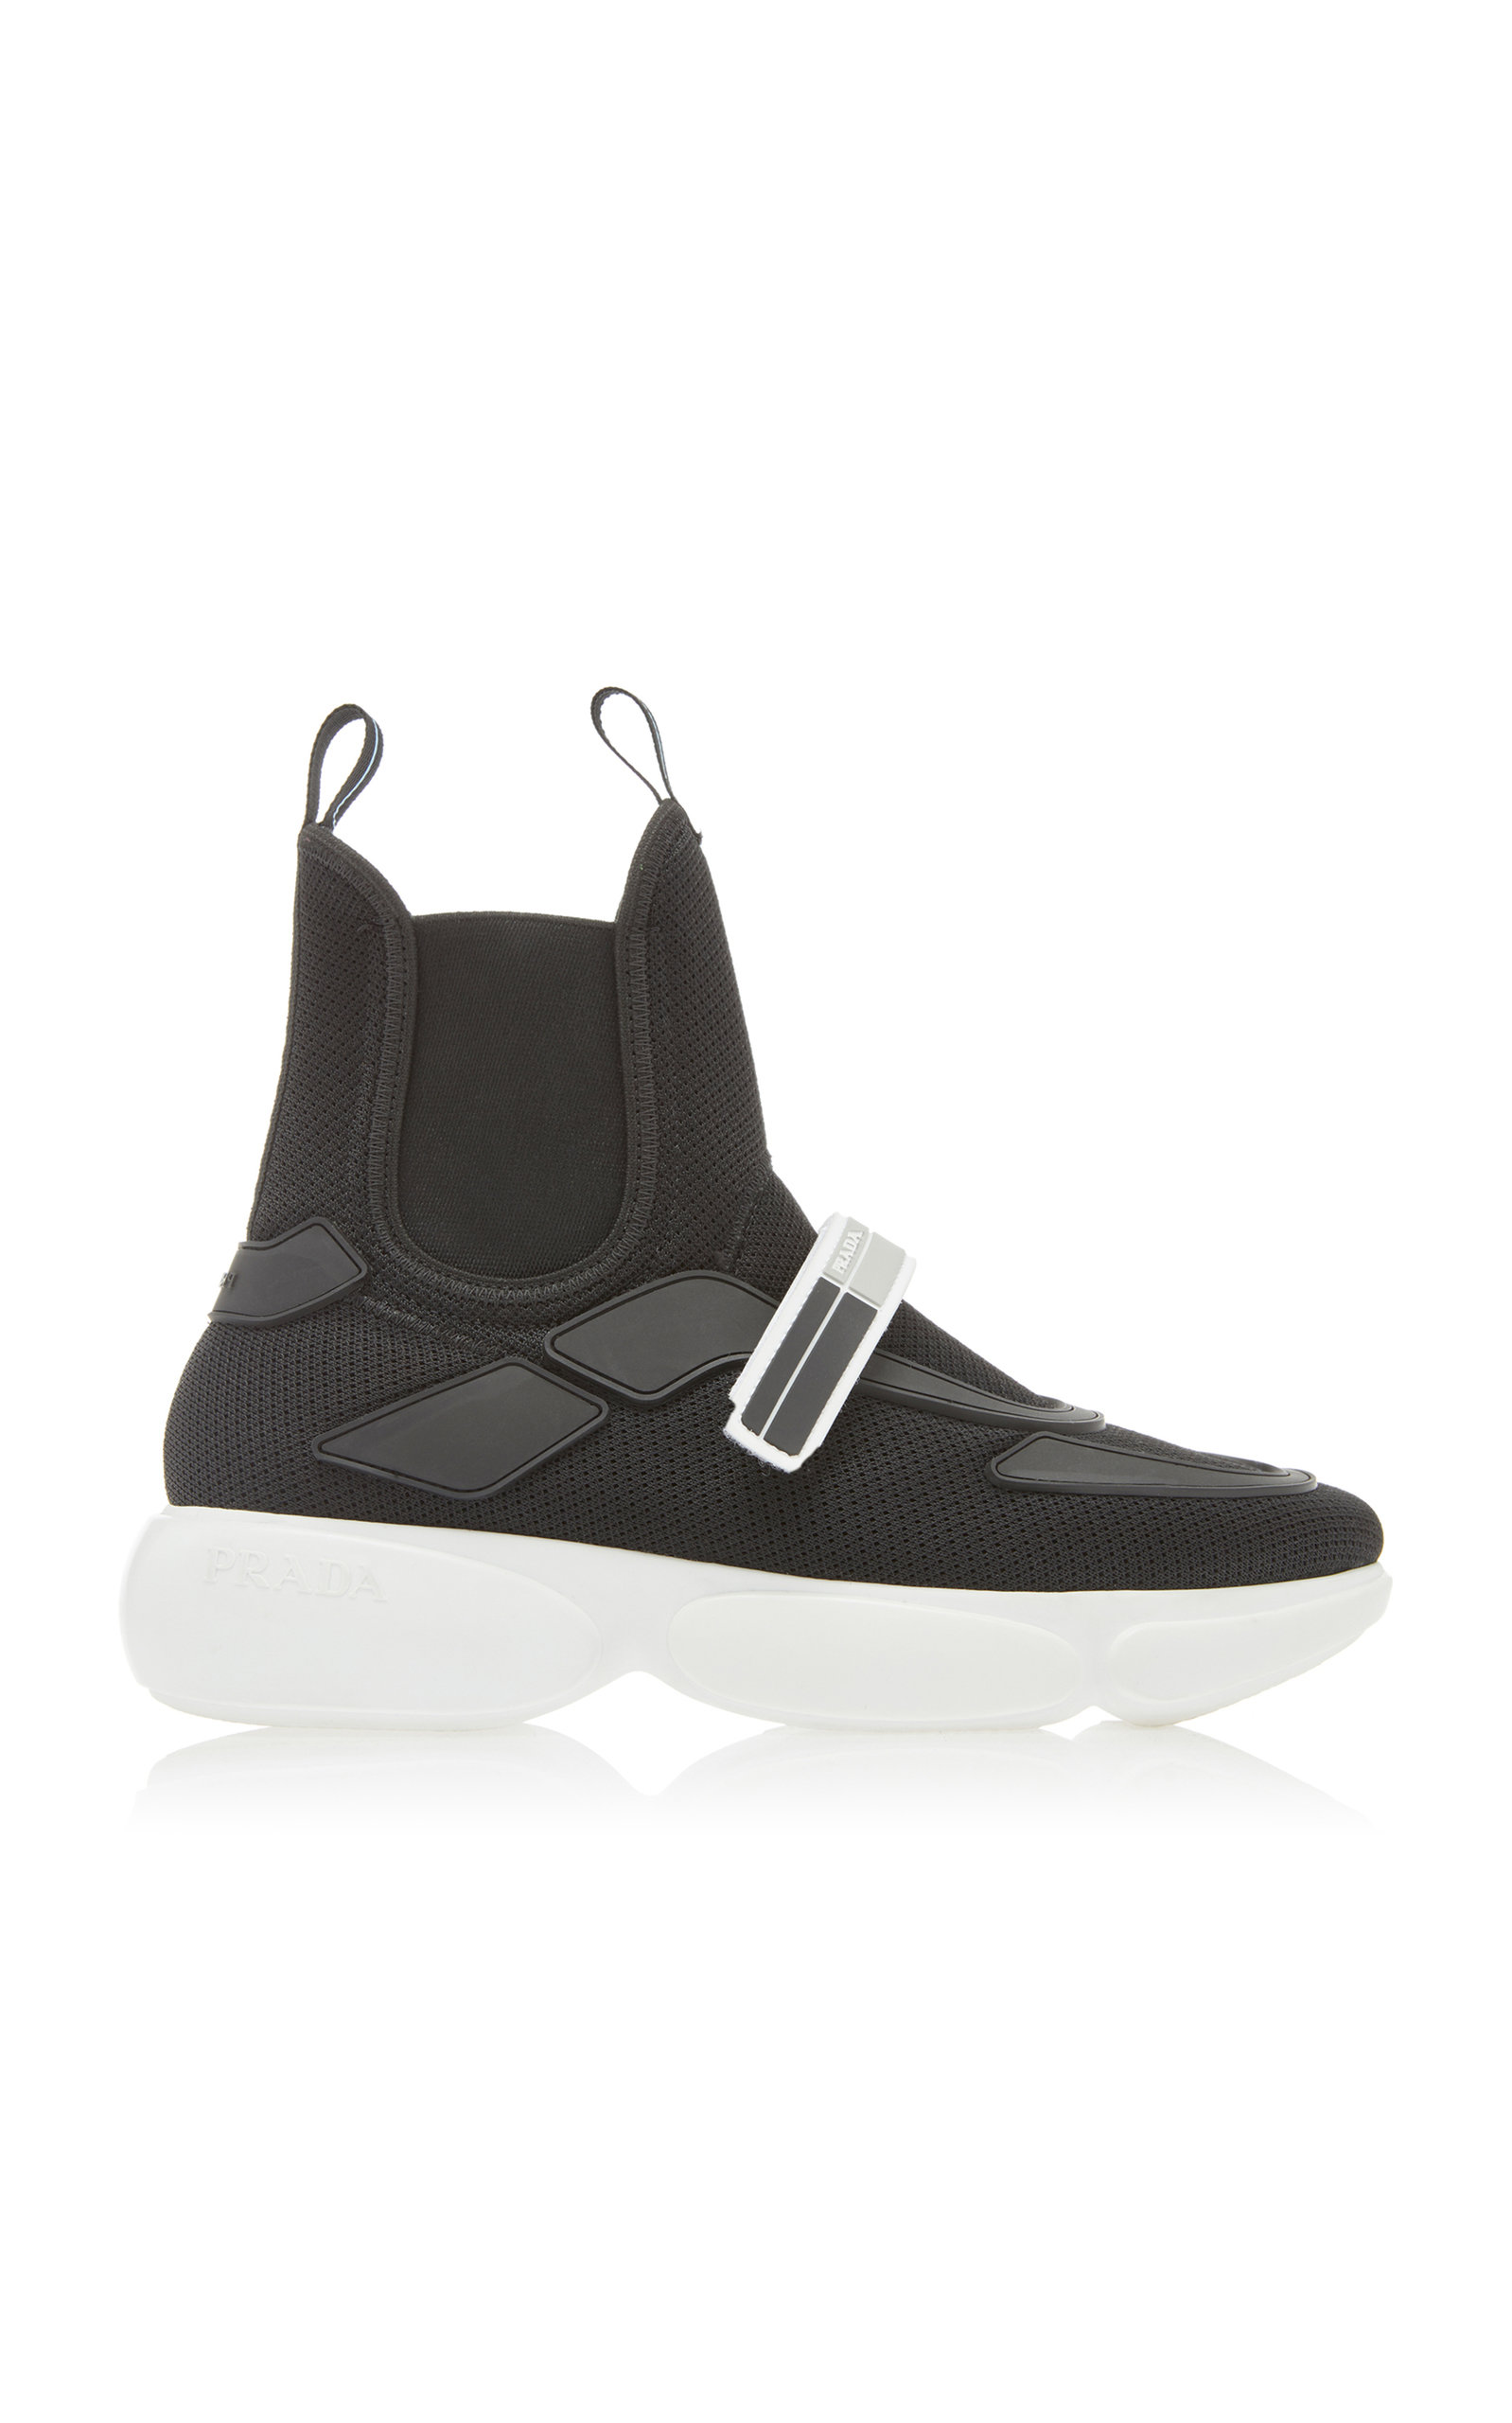 Prada - Women's Tronchetti Sneakers  - Black/white - Moda Operandi